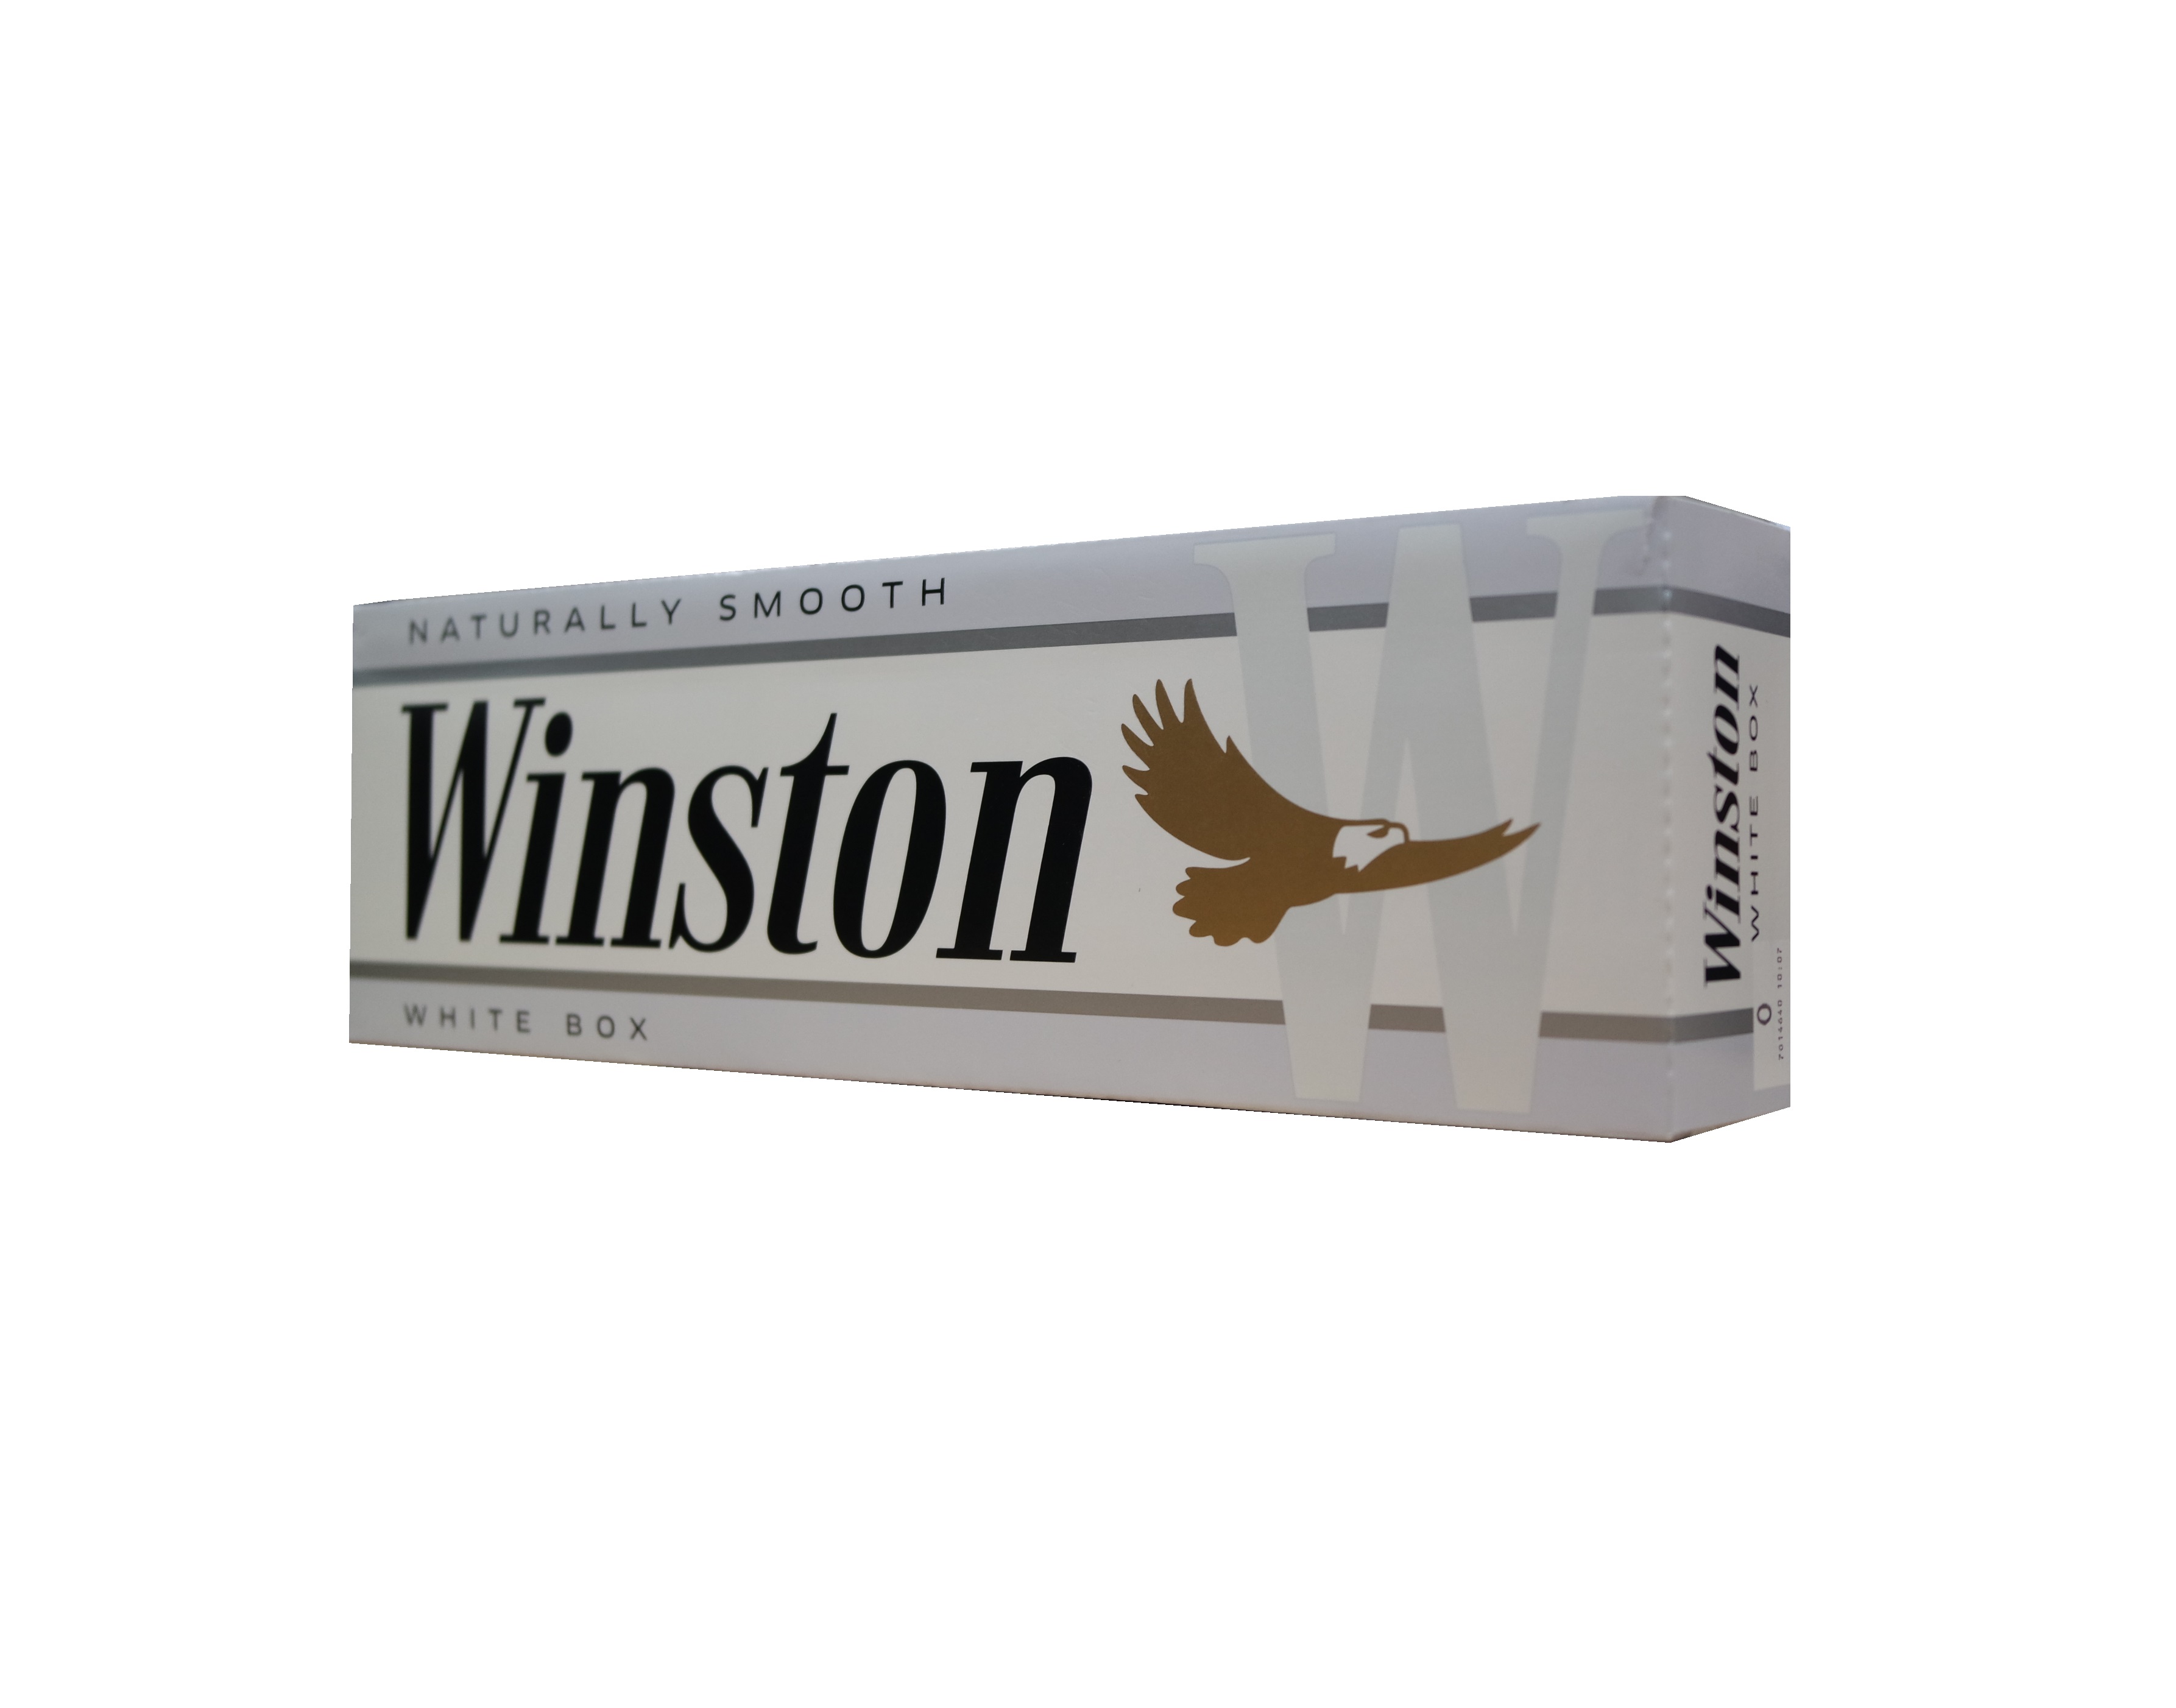 Winston white box